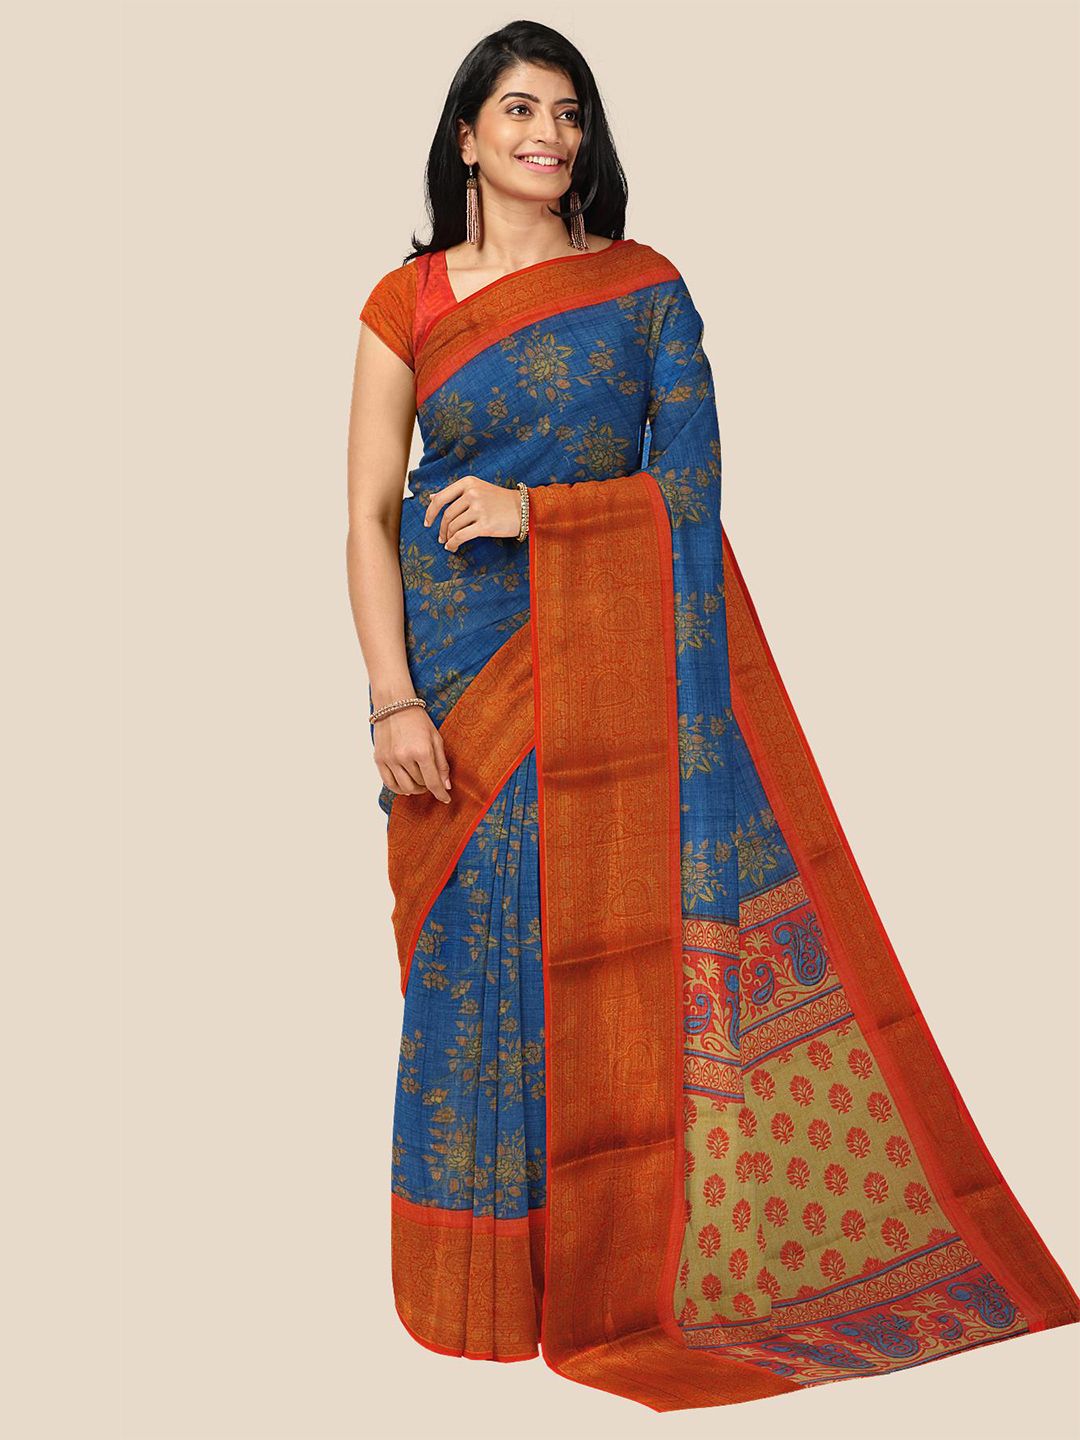 Kalamandir Blue & Red Ethnic Motifs Zari Pure Linen Saree Price in India